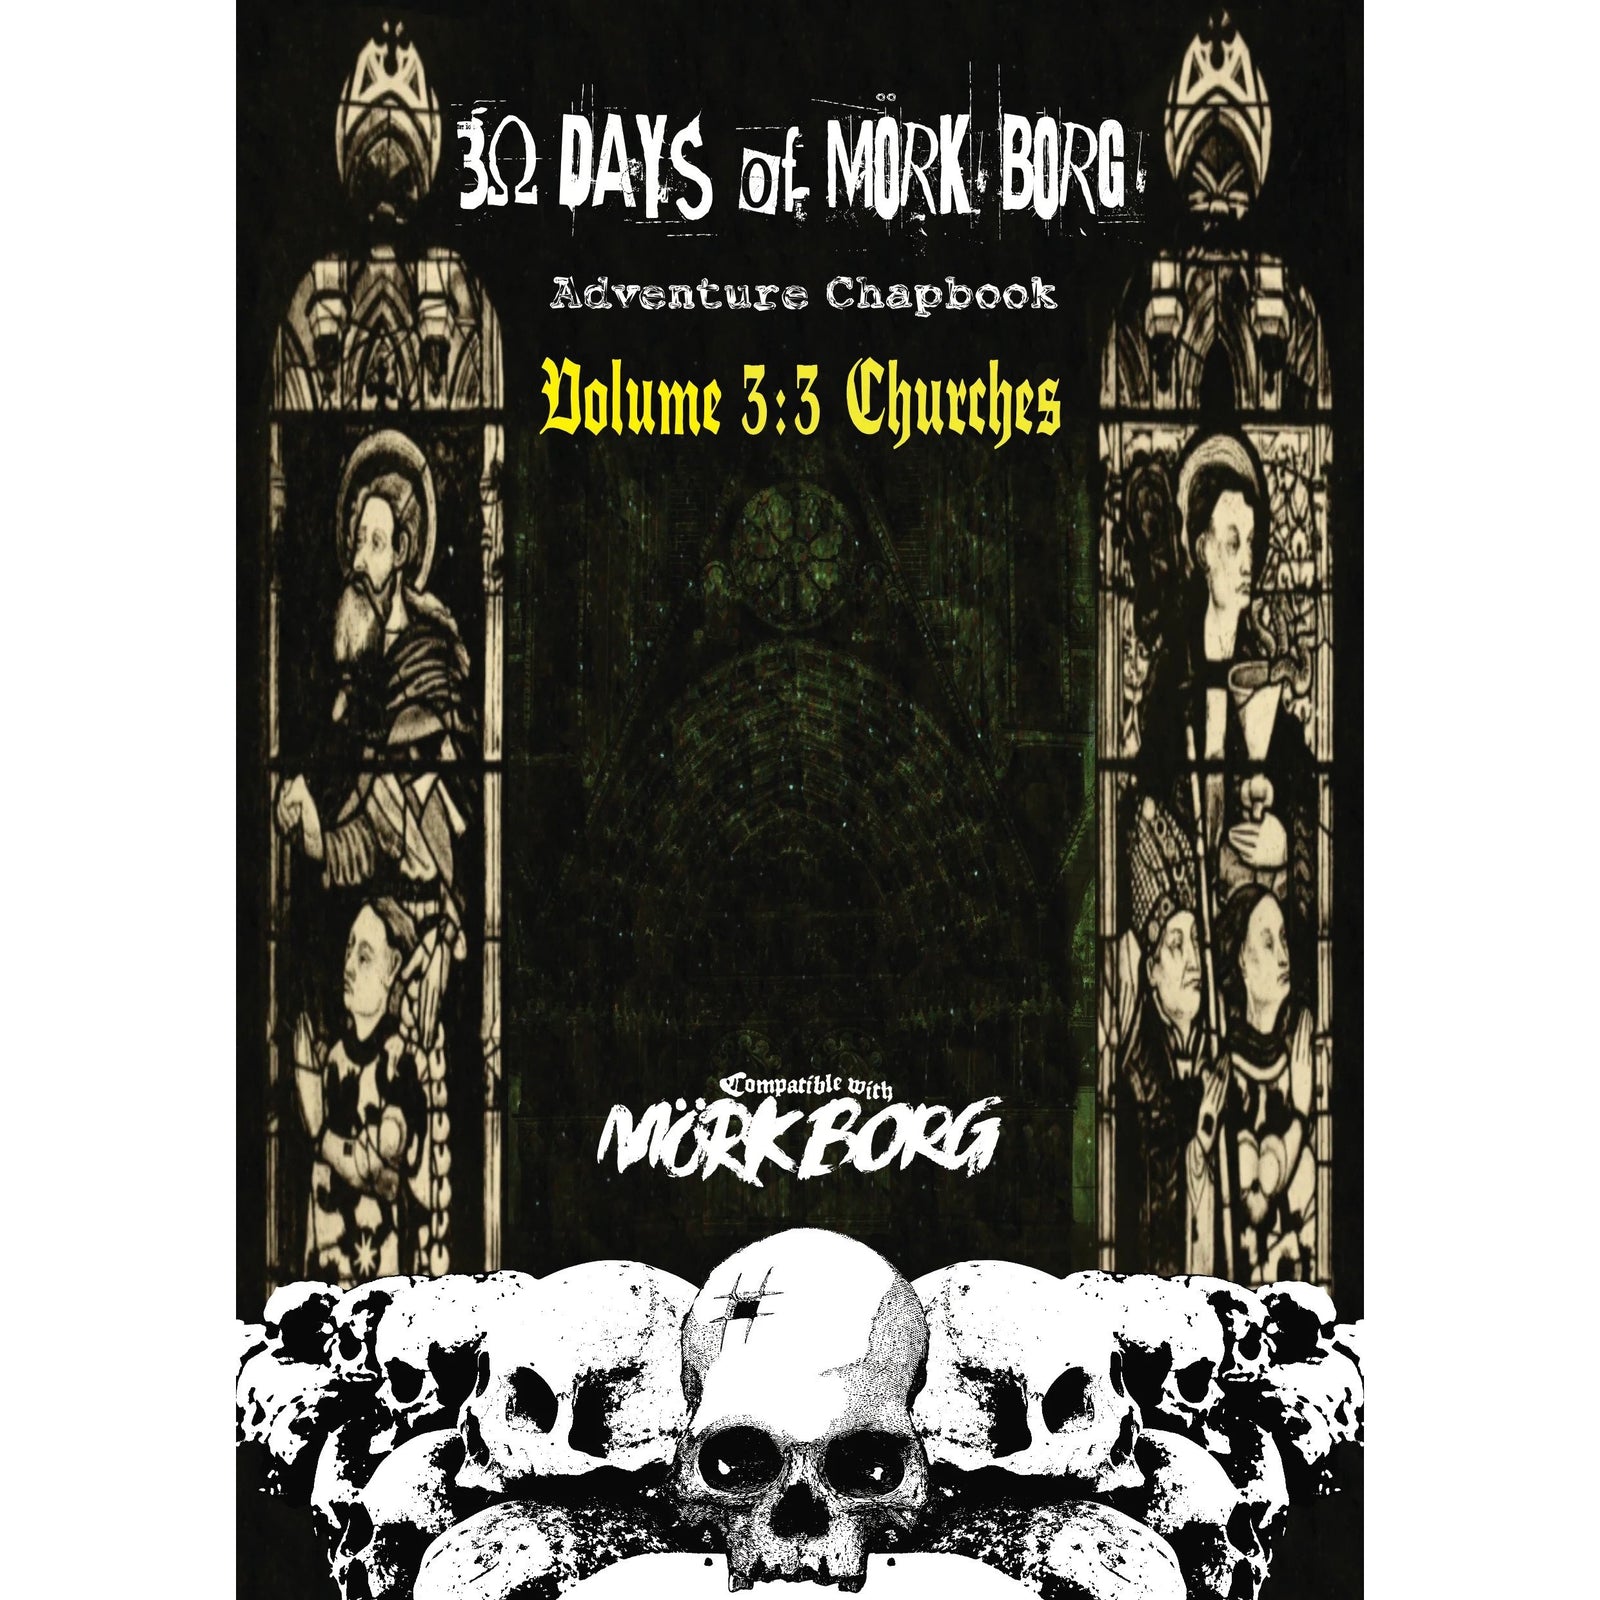 30 Days of MÖRK BORG Adventure Chapbook Volume 3: 3 Churches